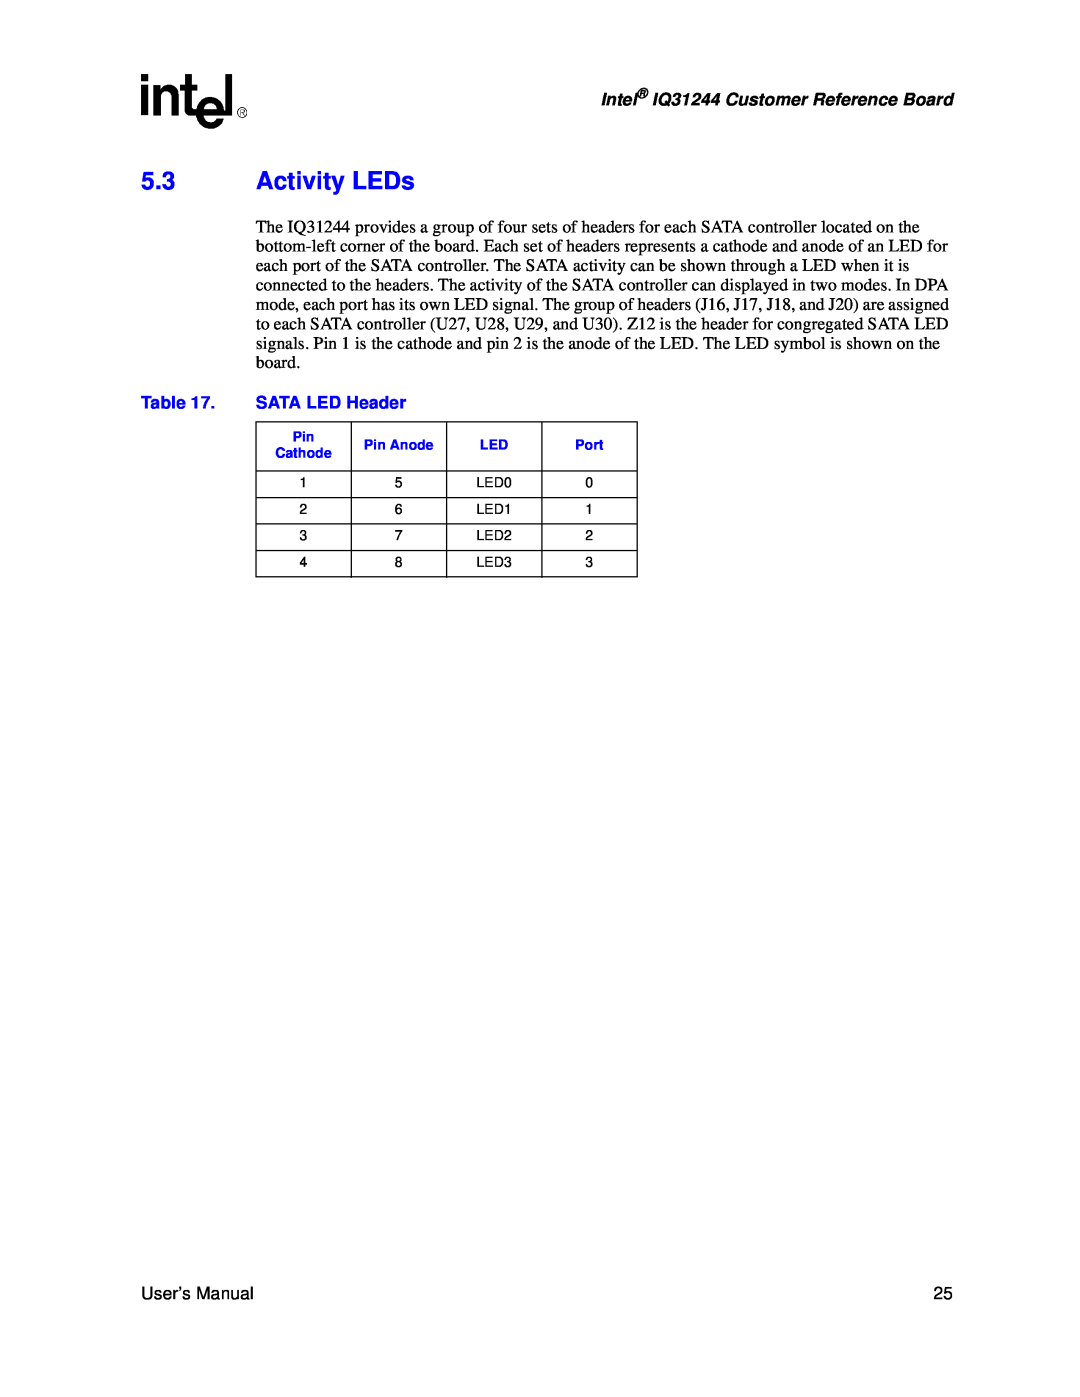 Intel user manual 5.3Activity LEDs, SATA LED Header, Intel IQ31244 Customer Reference Board 